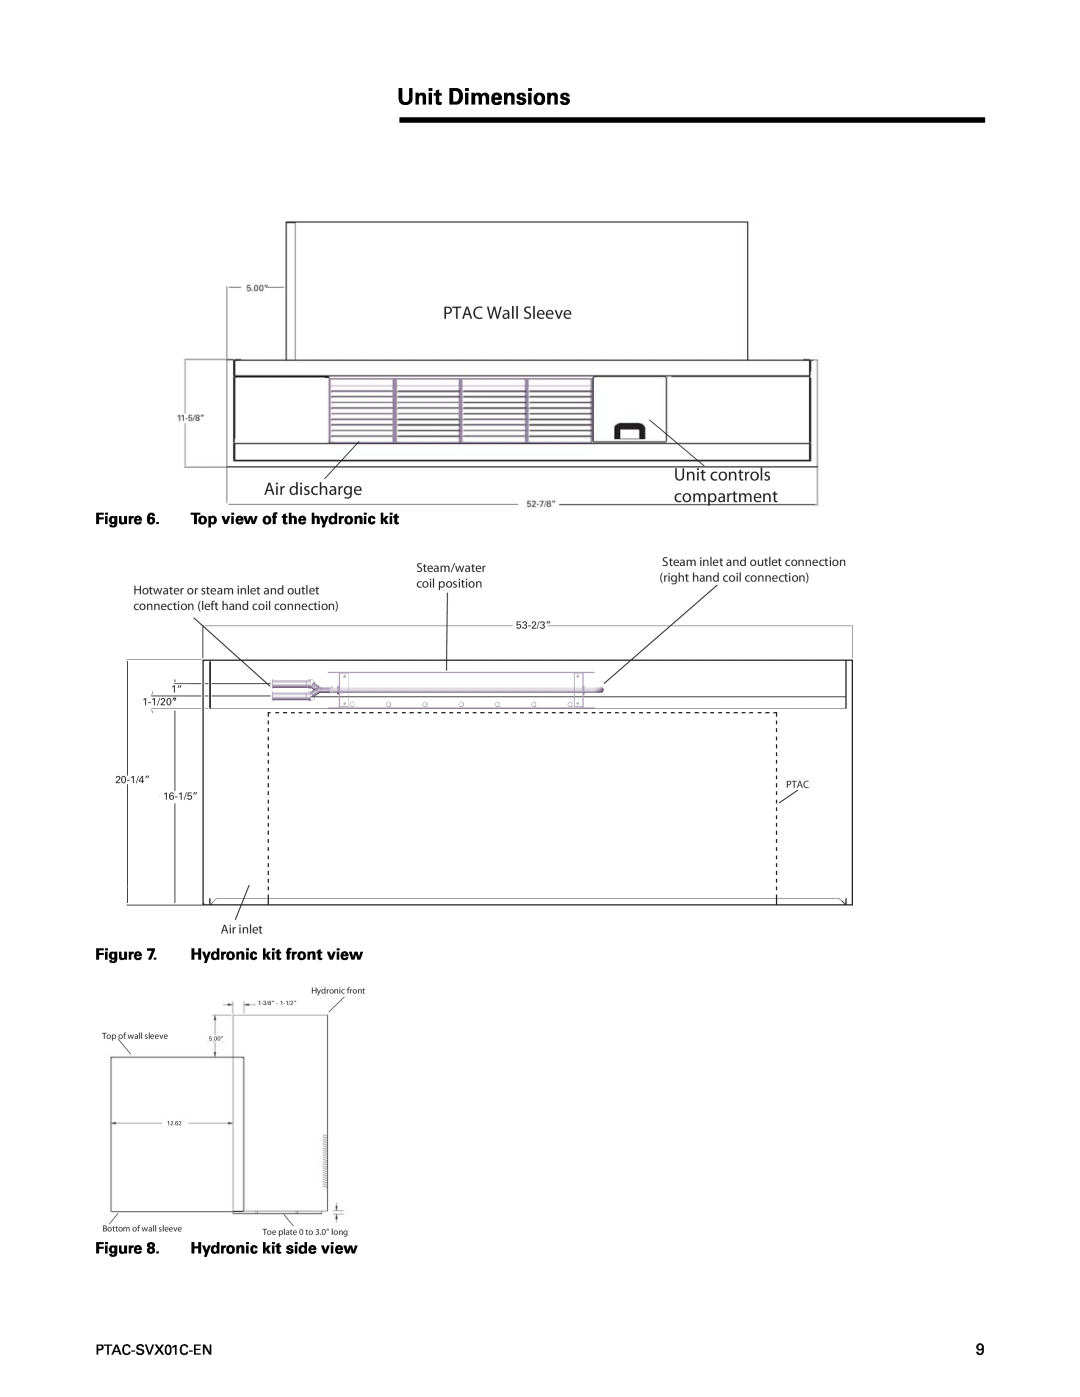 Trane PTAC-SVX01C-EN manual Unit Dimensions, Front View, PTAC Wall Sleeve Unit controls, Air discharge, compartment 